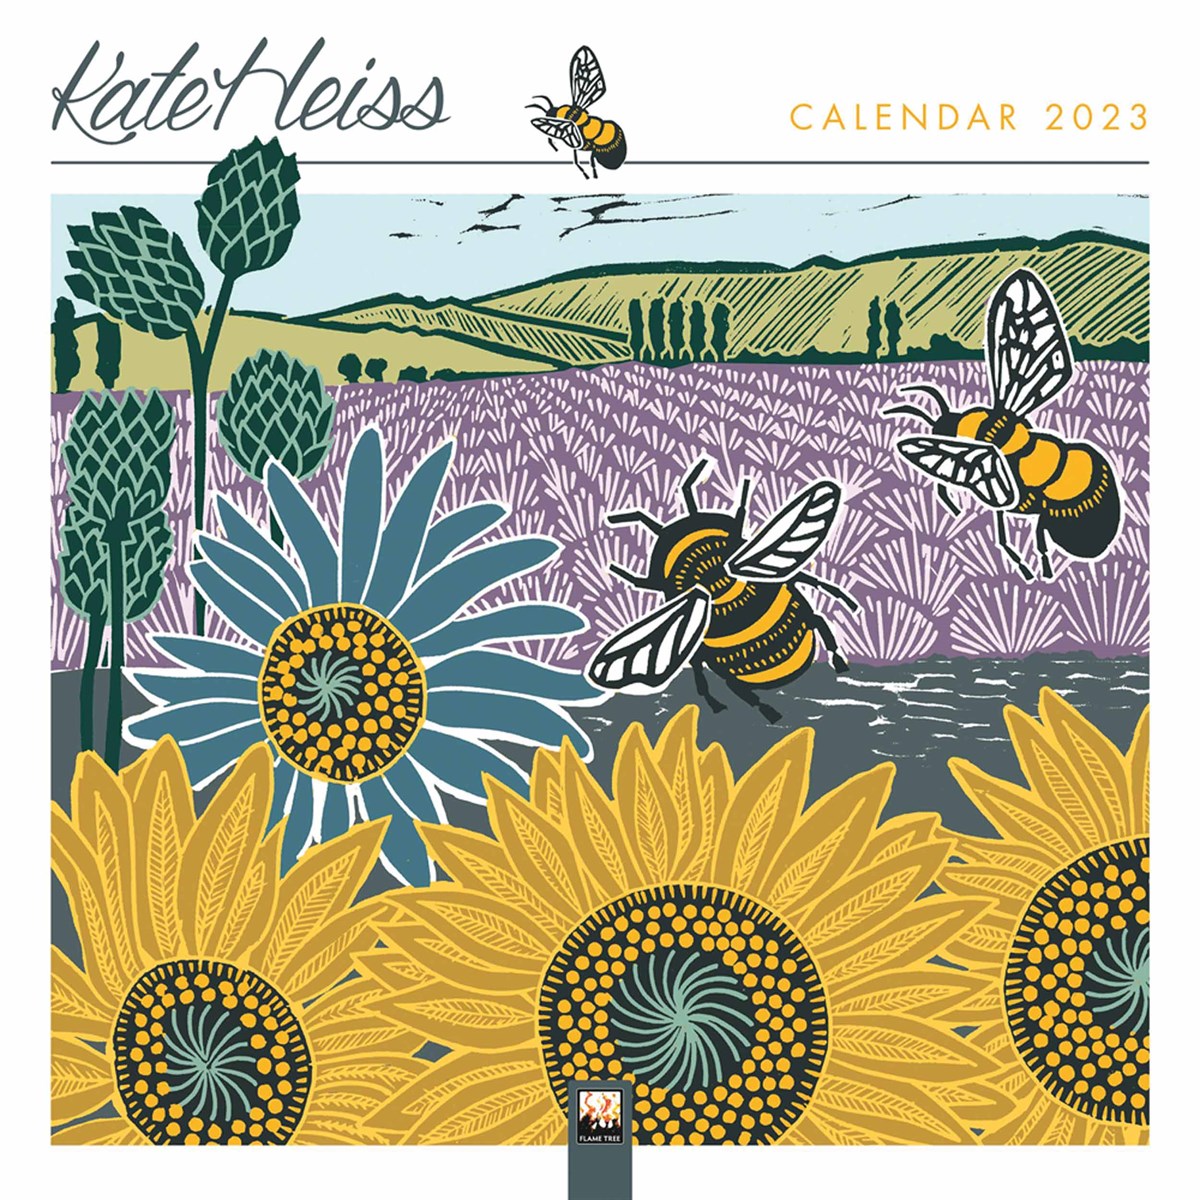 Kate Heiss 2023 Calendars